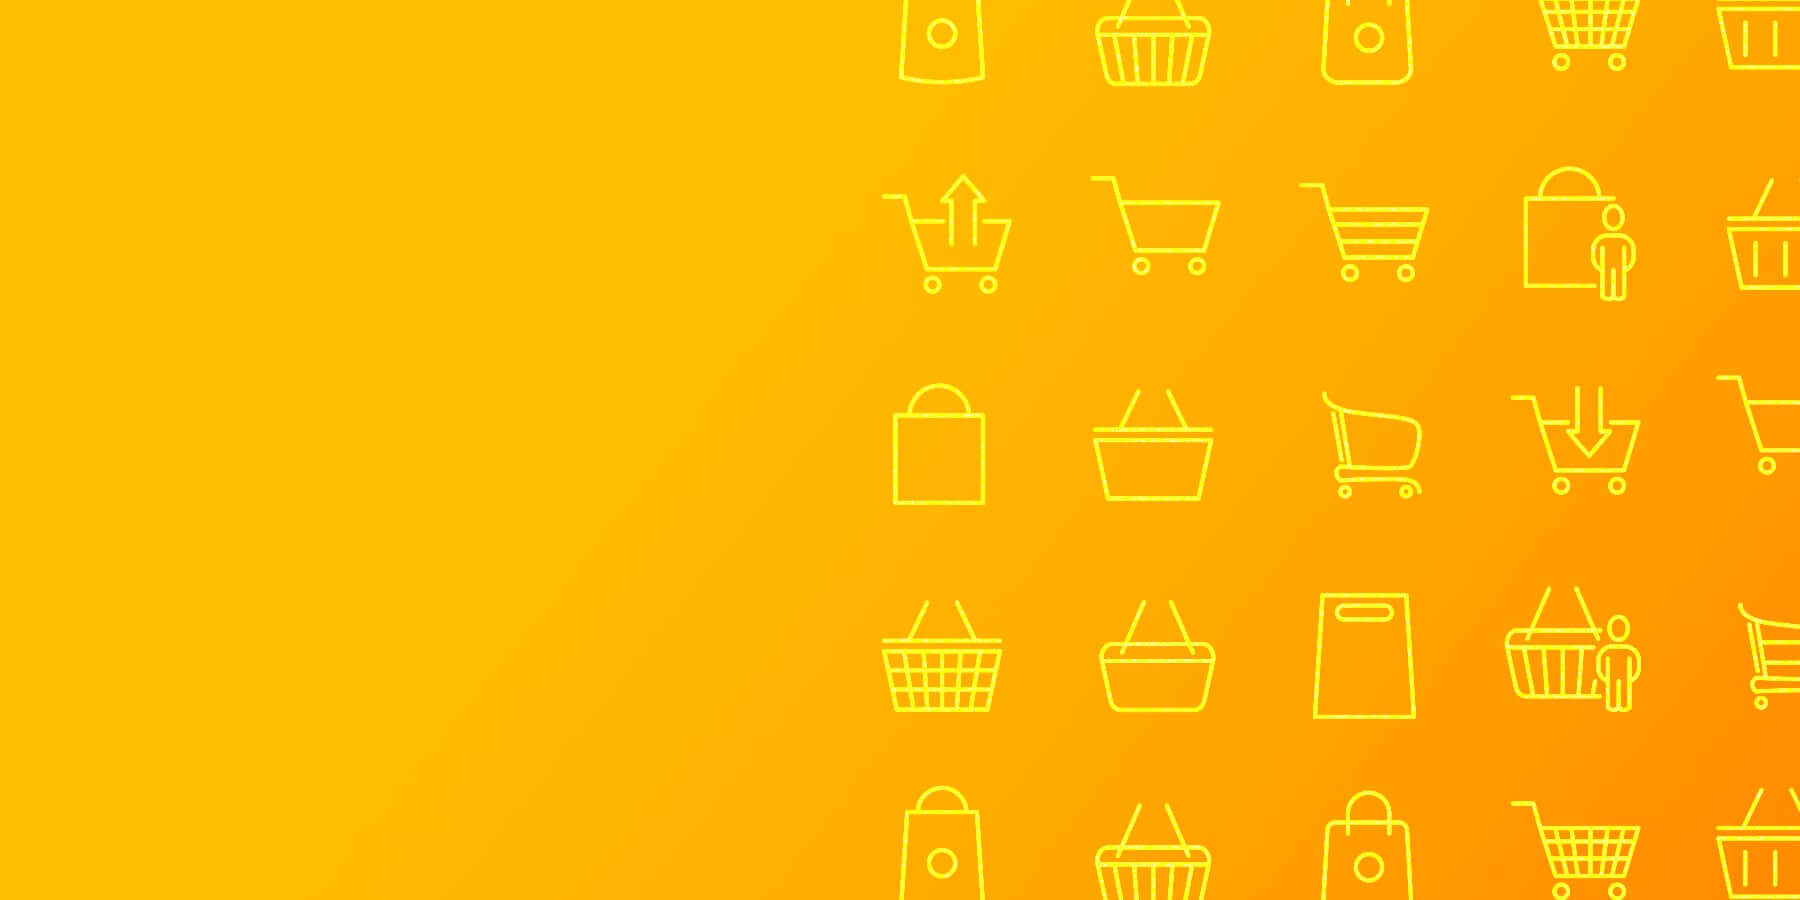 Online shopping cart illustrations